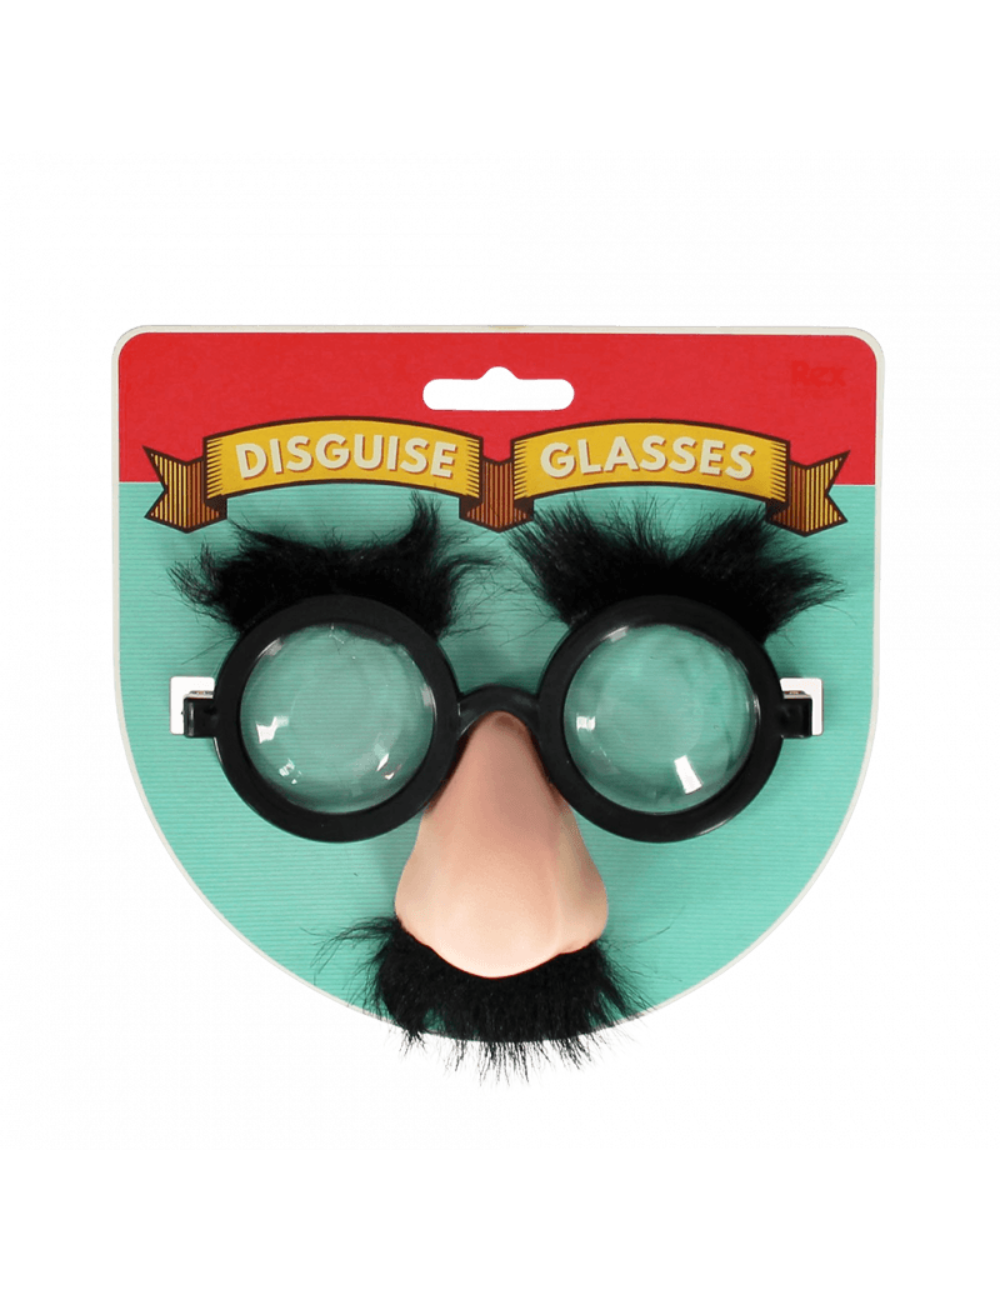 Disguise Glasses - Classic Jokes